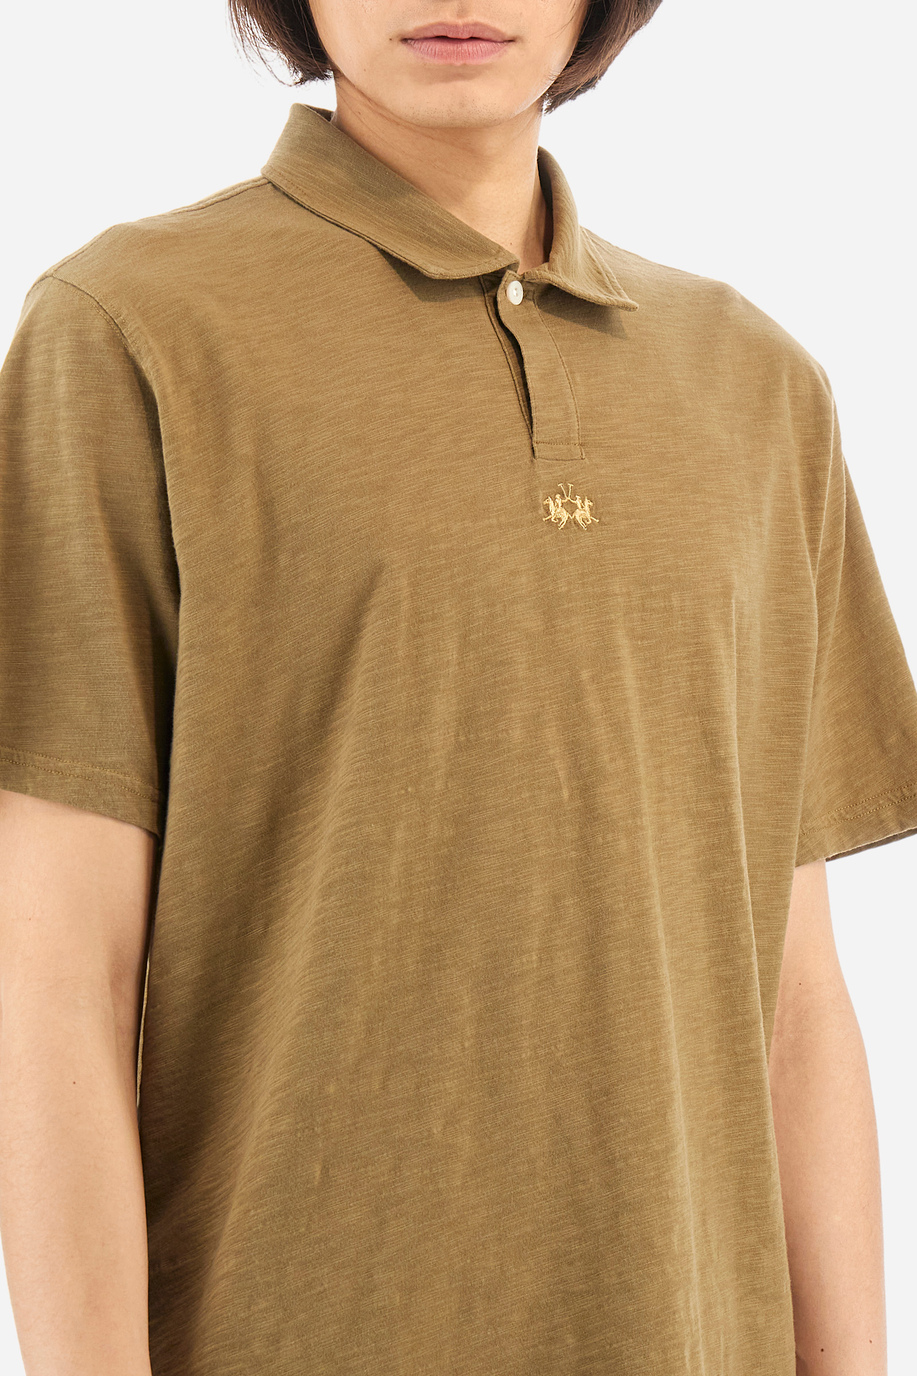 Men's polo shirt in a regular fit - Polo 19-42 - Apparel | La Martina - Official Online Shop